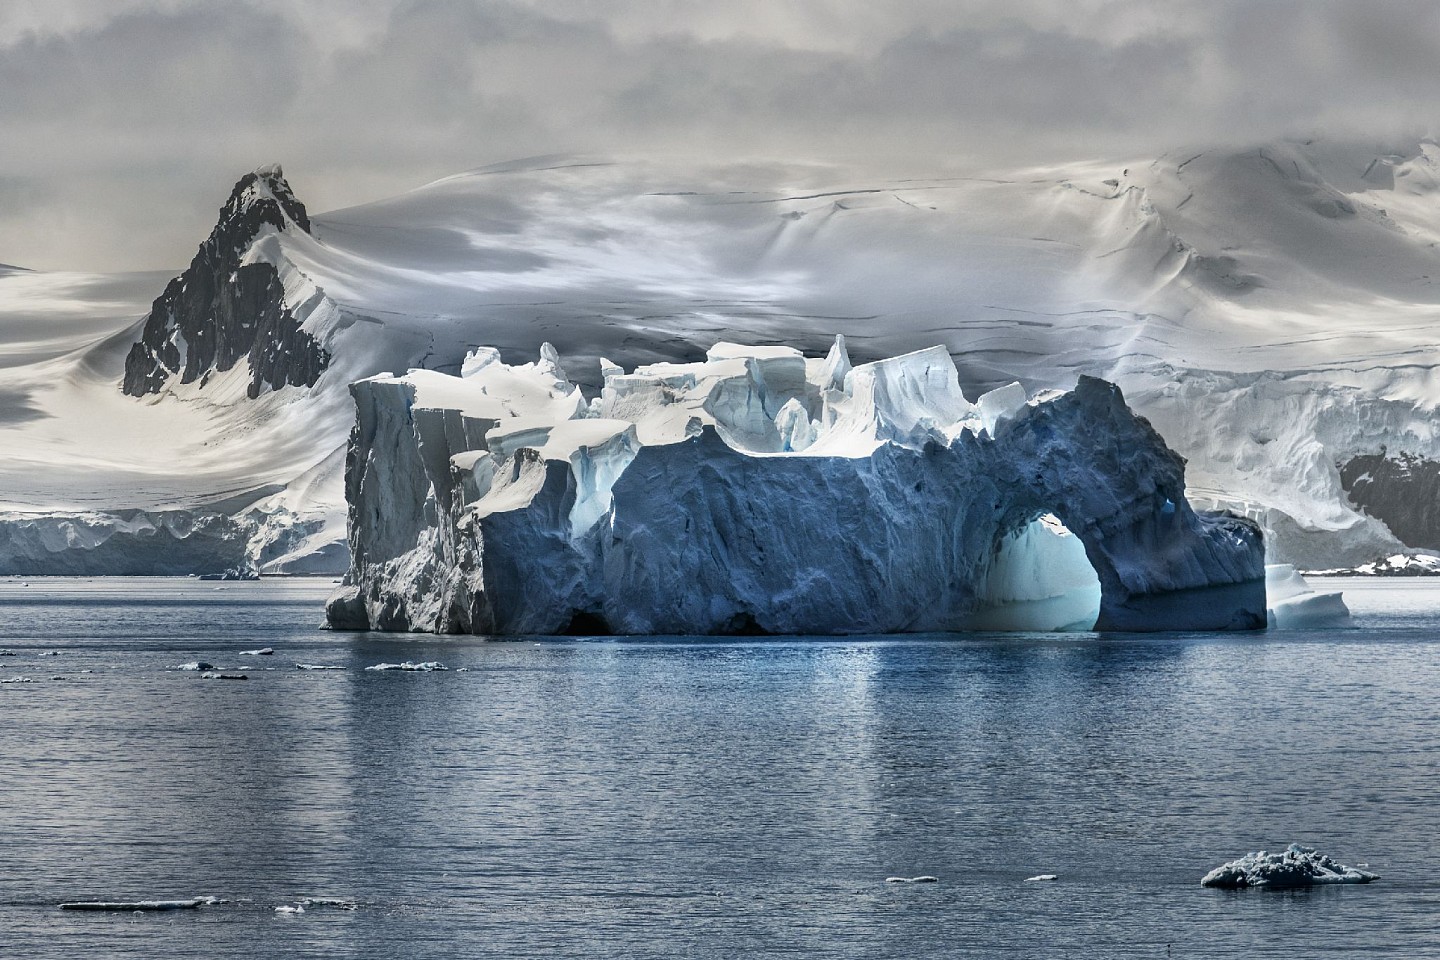 Steve McCurry, Iceberg, 2019
FujiFlex Crystal Archive Print
Price/Size on request